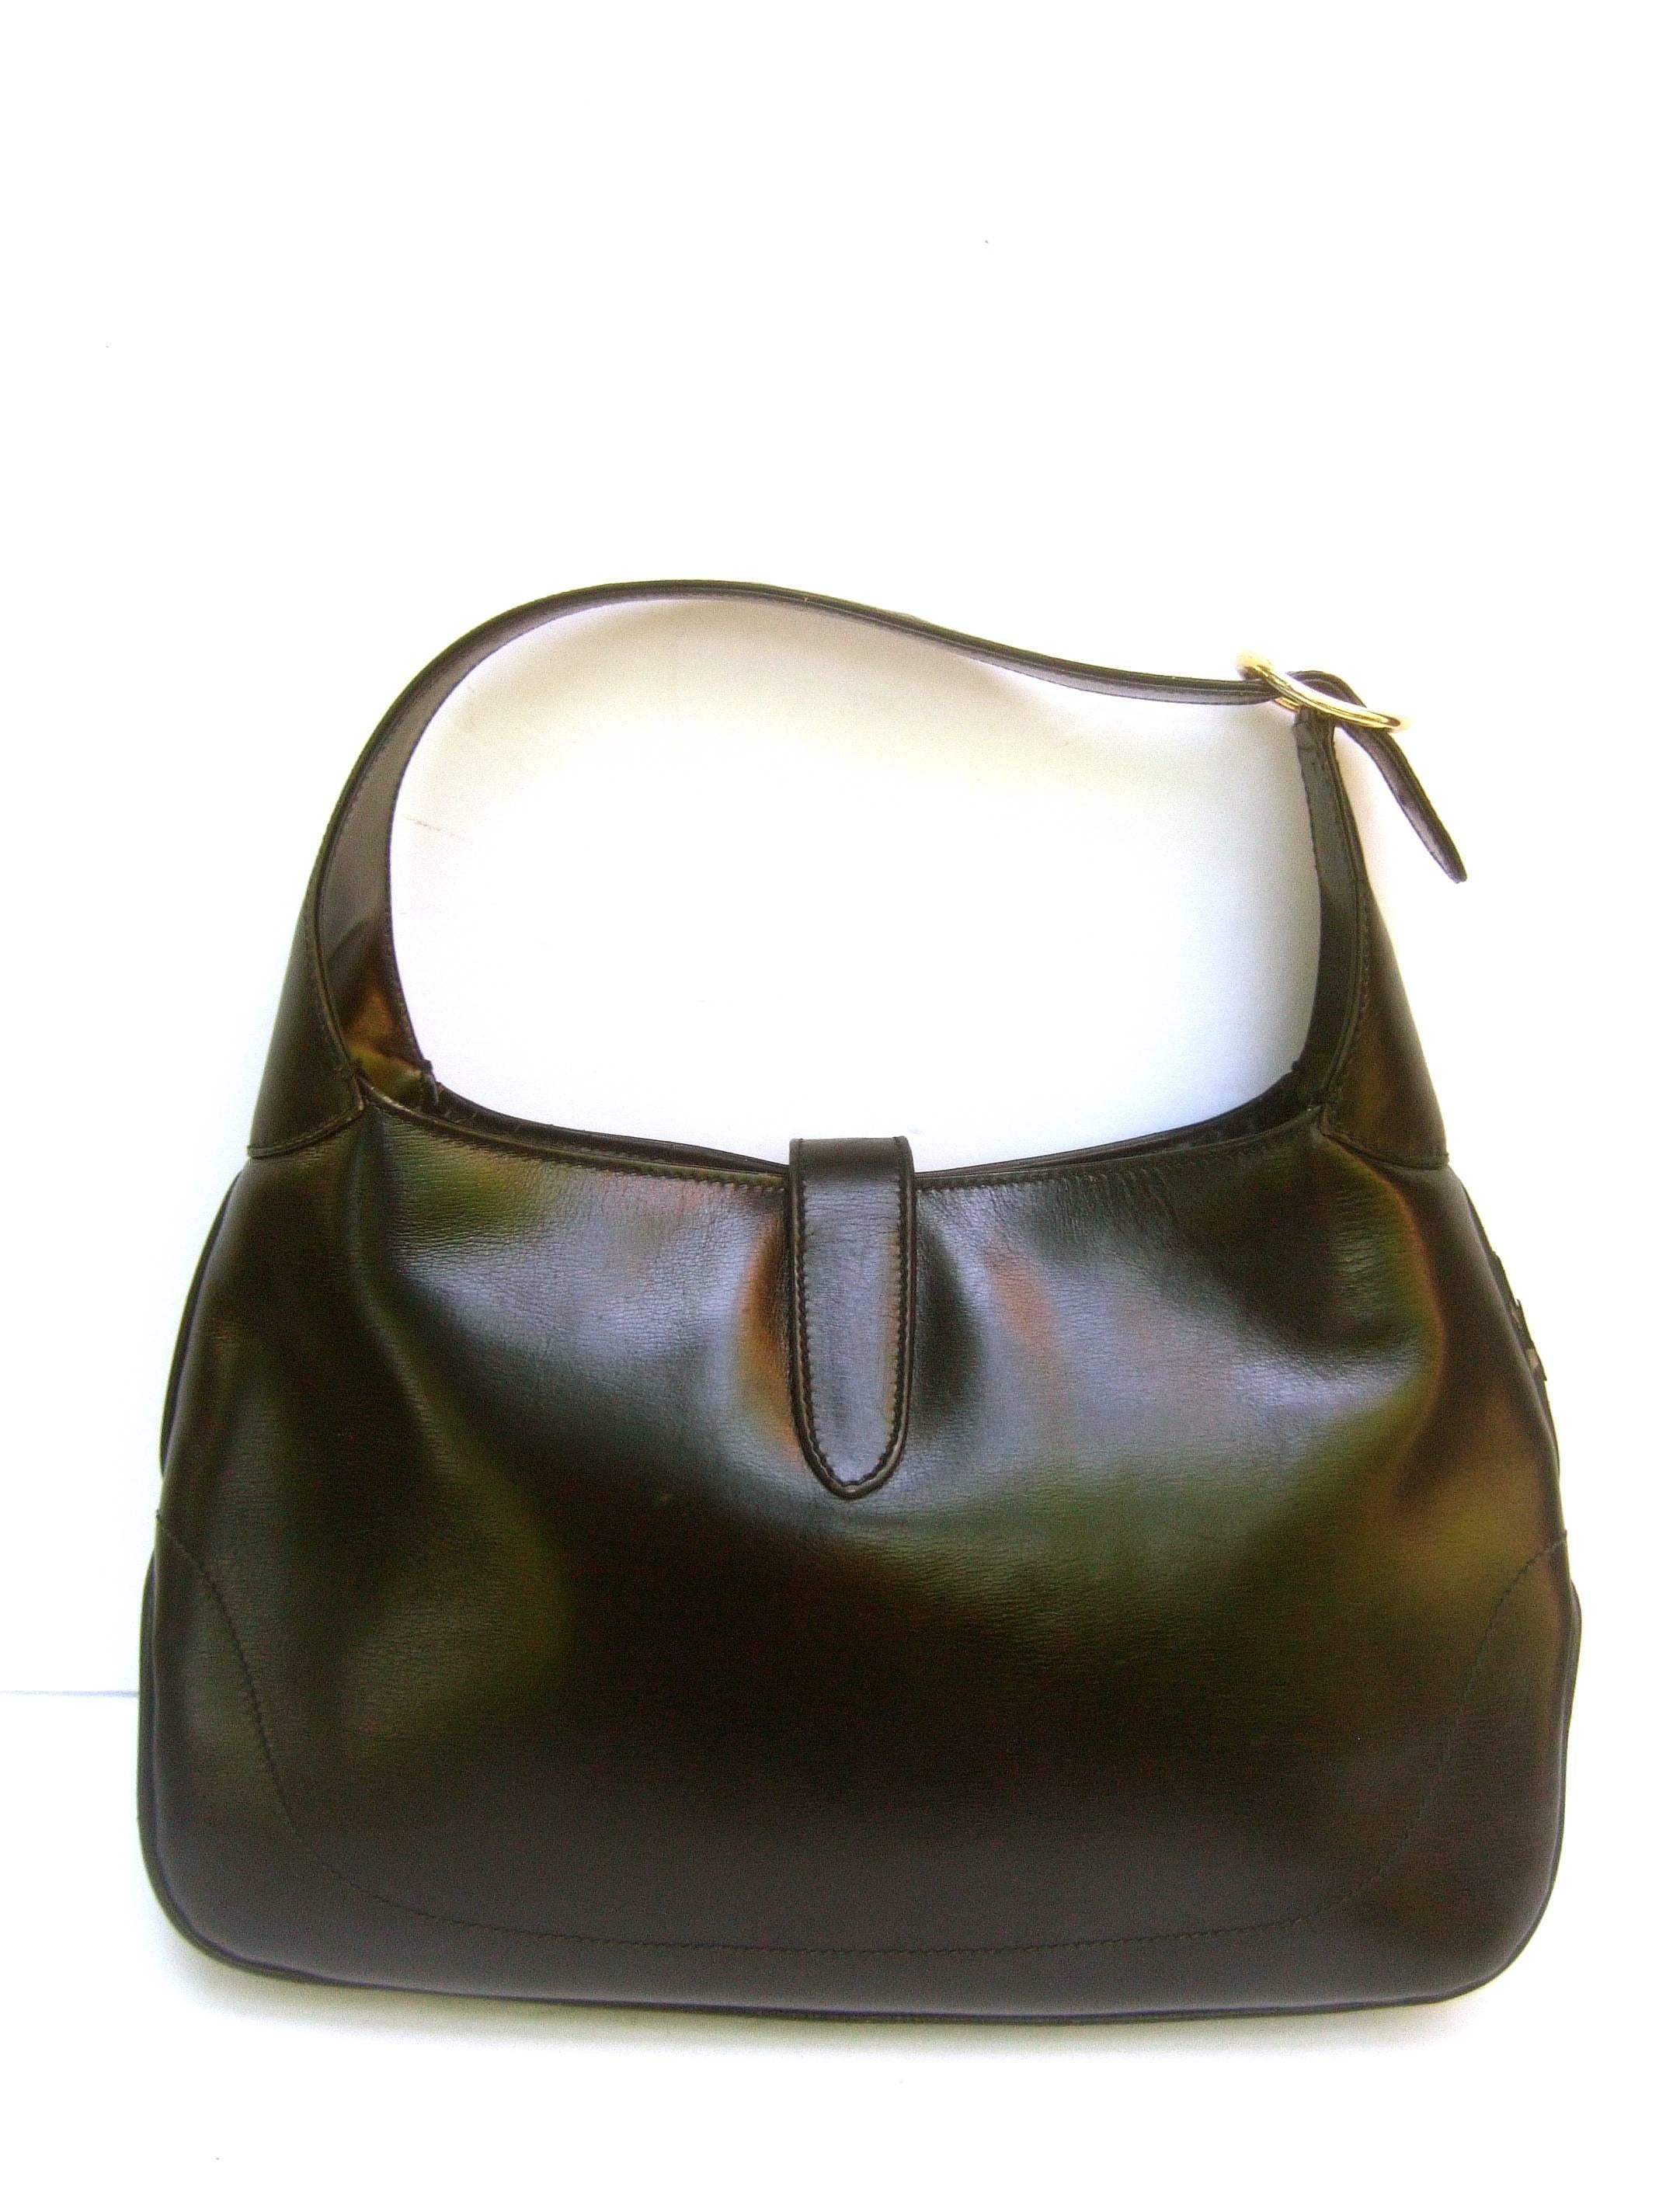 Gucci Italy Iconic Black Leather Piston Jackie O Handbag ca 1970s 4